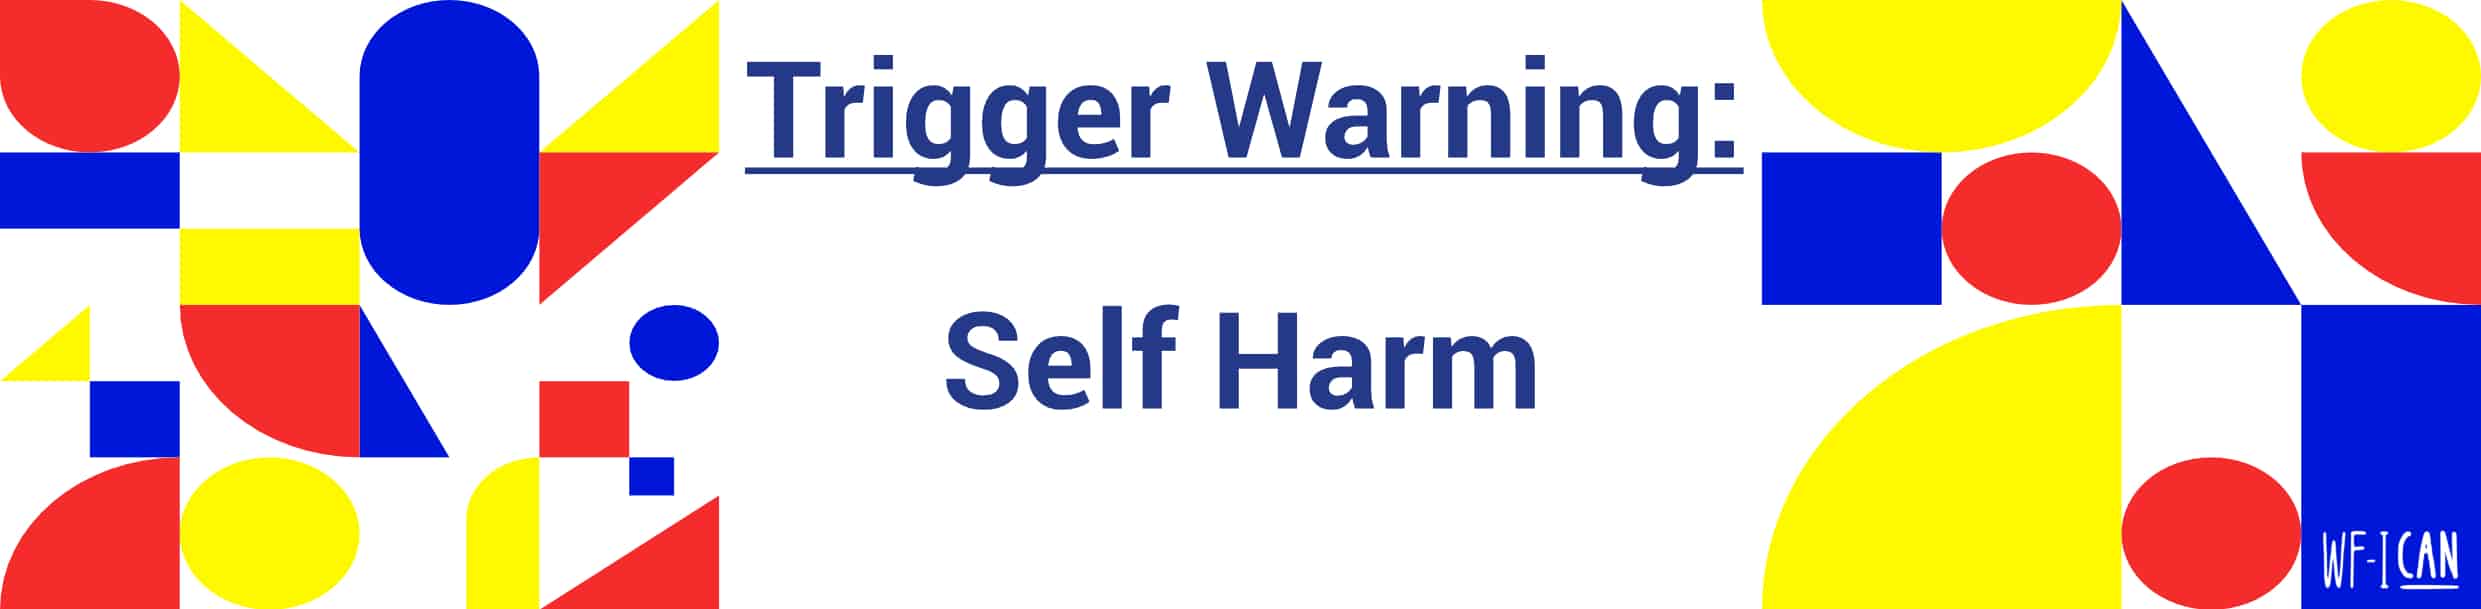 Trigger warning self harm